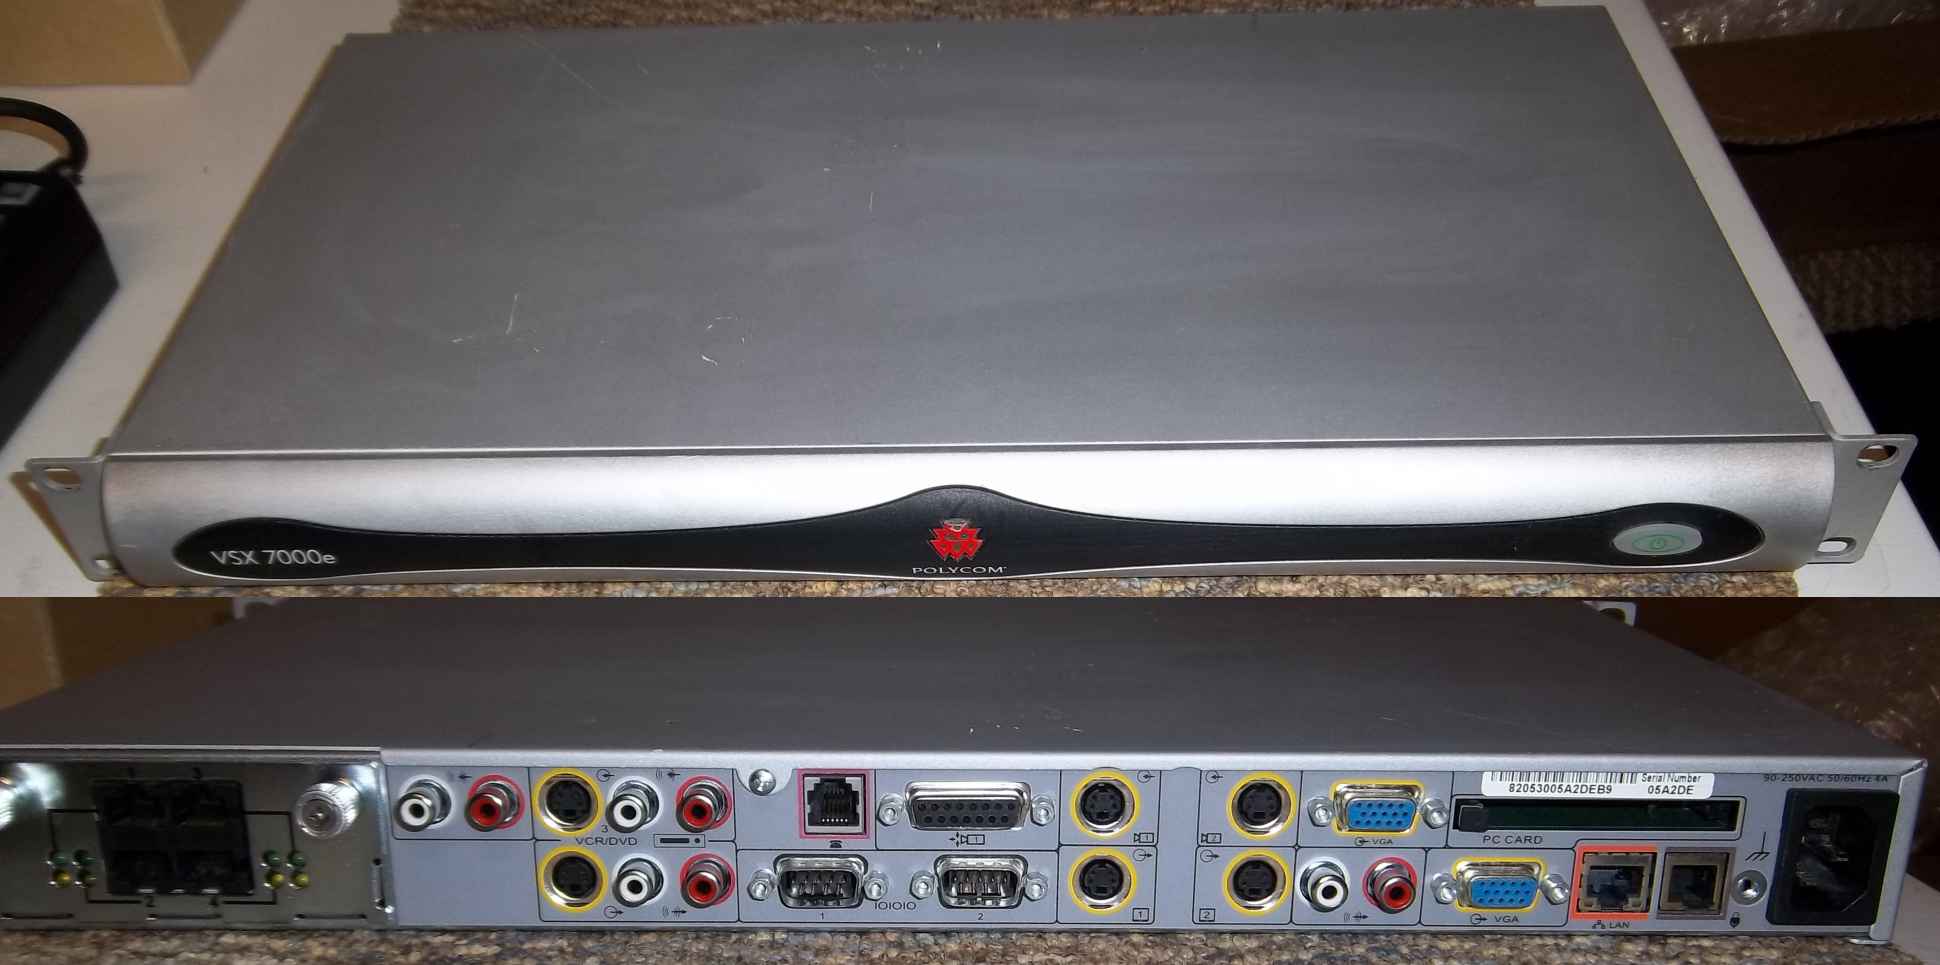 Polycom VSX-7000e Video Conference Controller